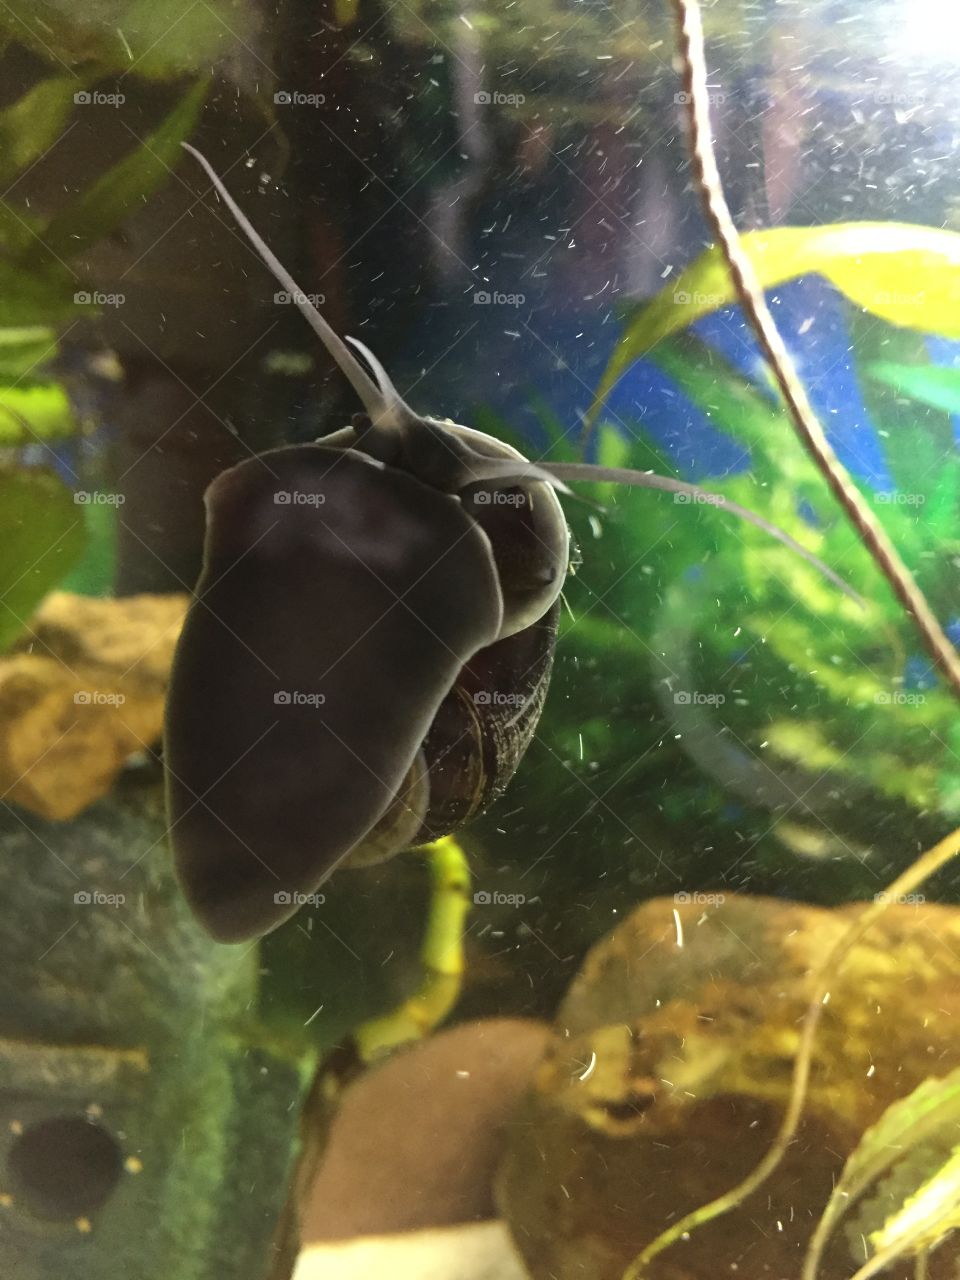 Blk snail